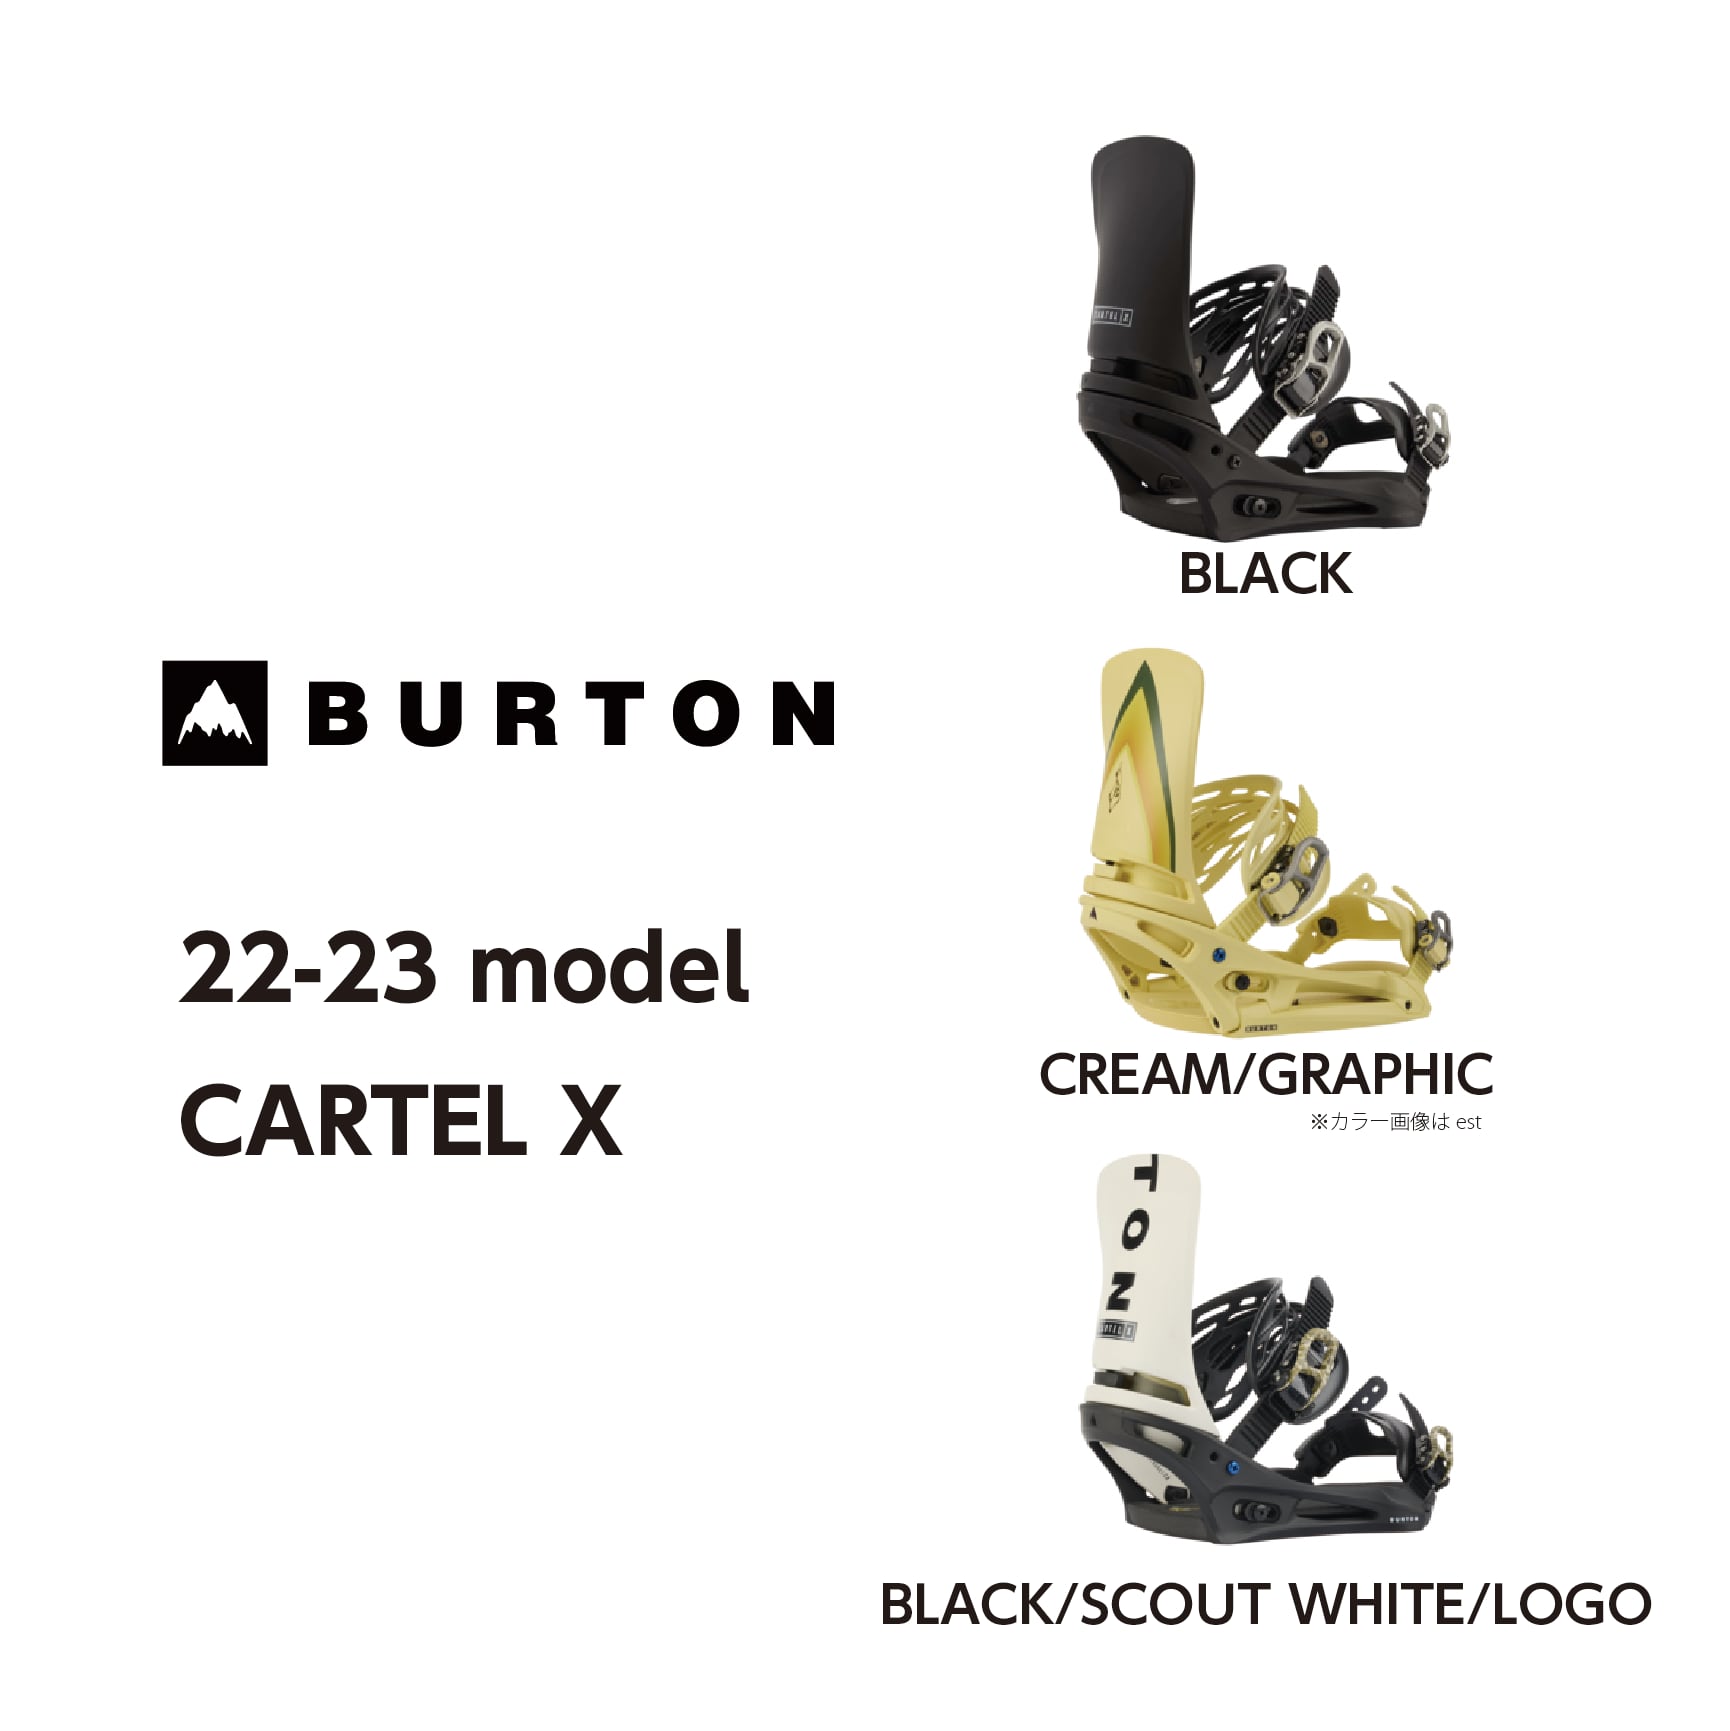 BURTON CATEL x  Mサイズ 22-23